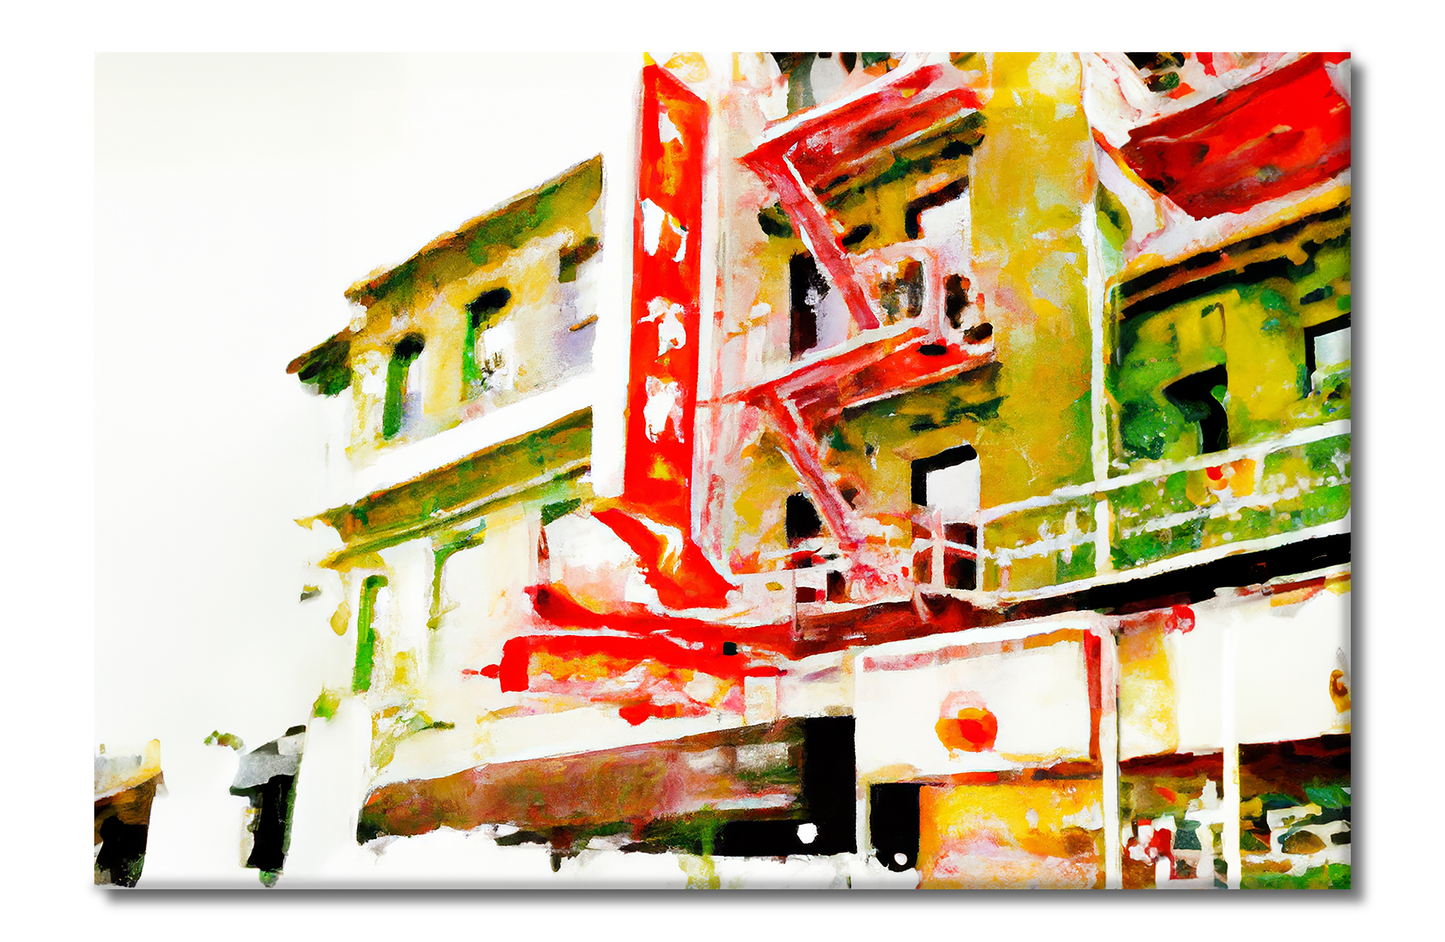 Chinatown, Urban Vibes, Digital Art, Canvas Print, High Quality Image, For Home Decor & Interior Design